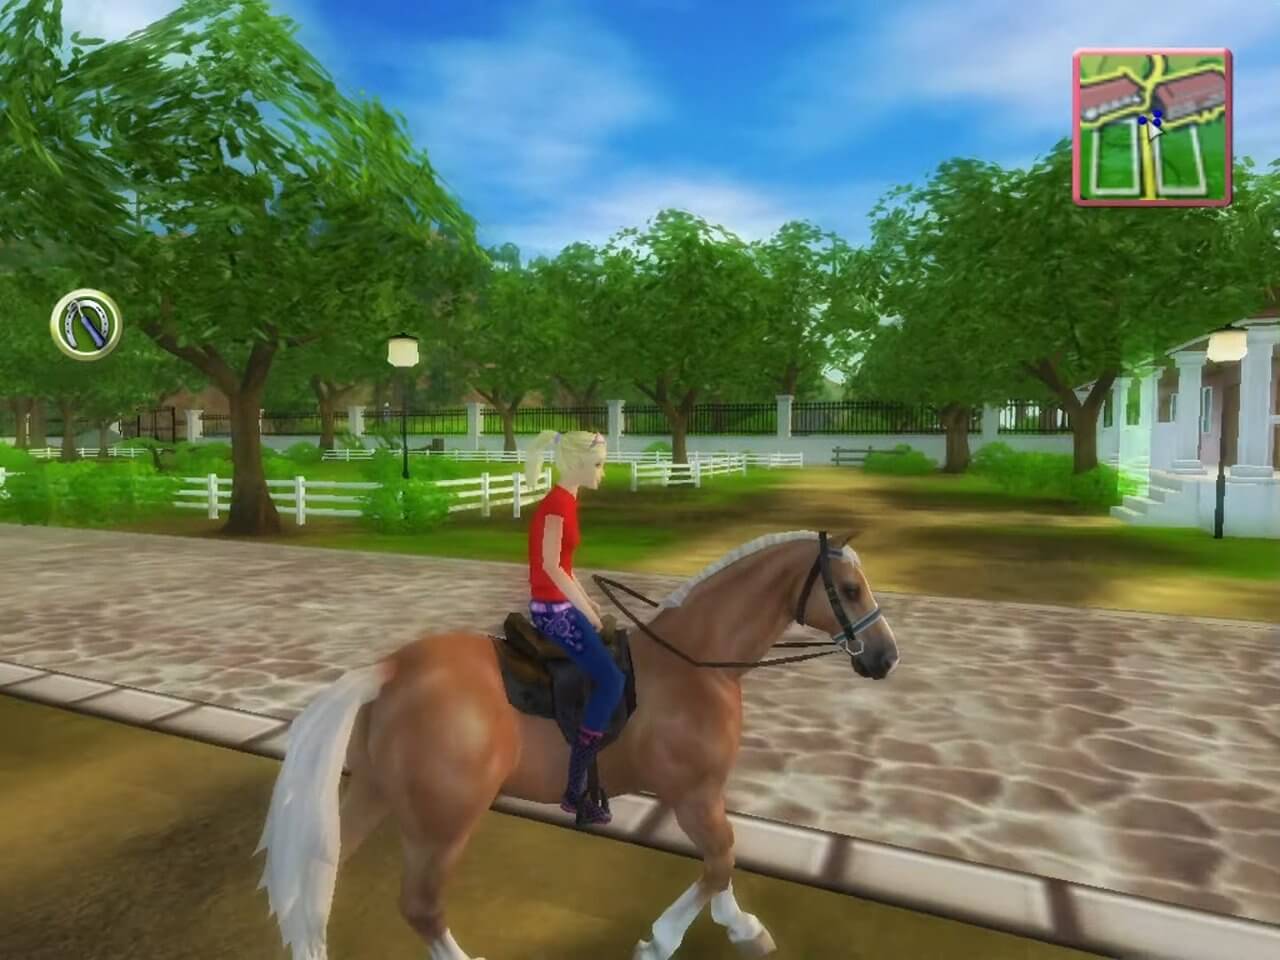 Jogo Barbie - Horse Adventures - Riding Camp - Playstation 2